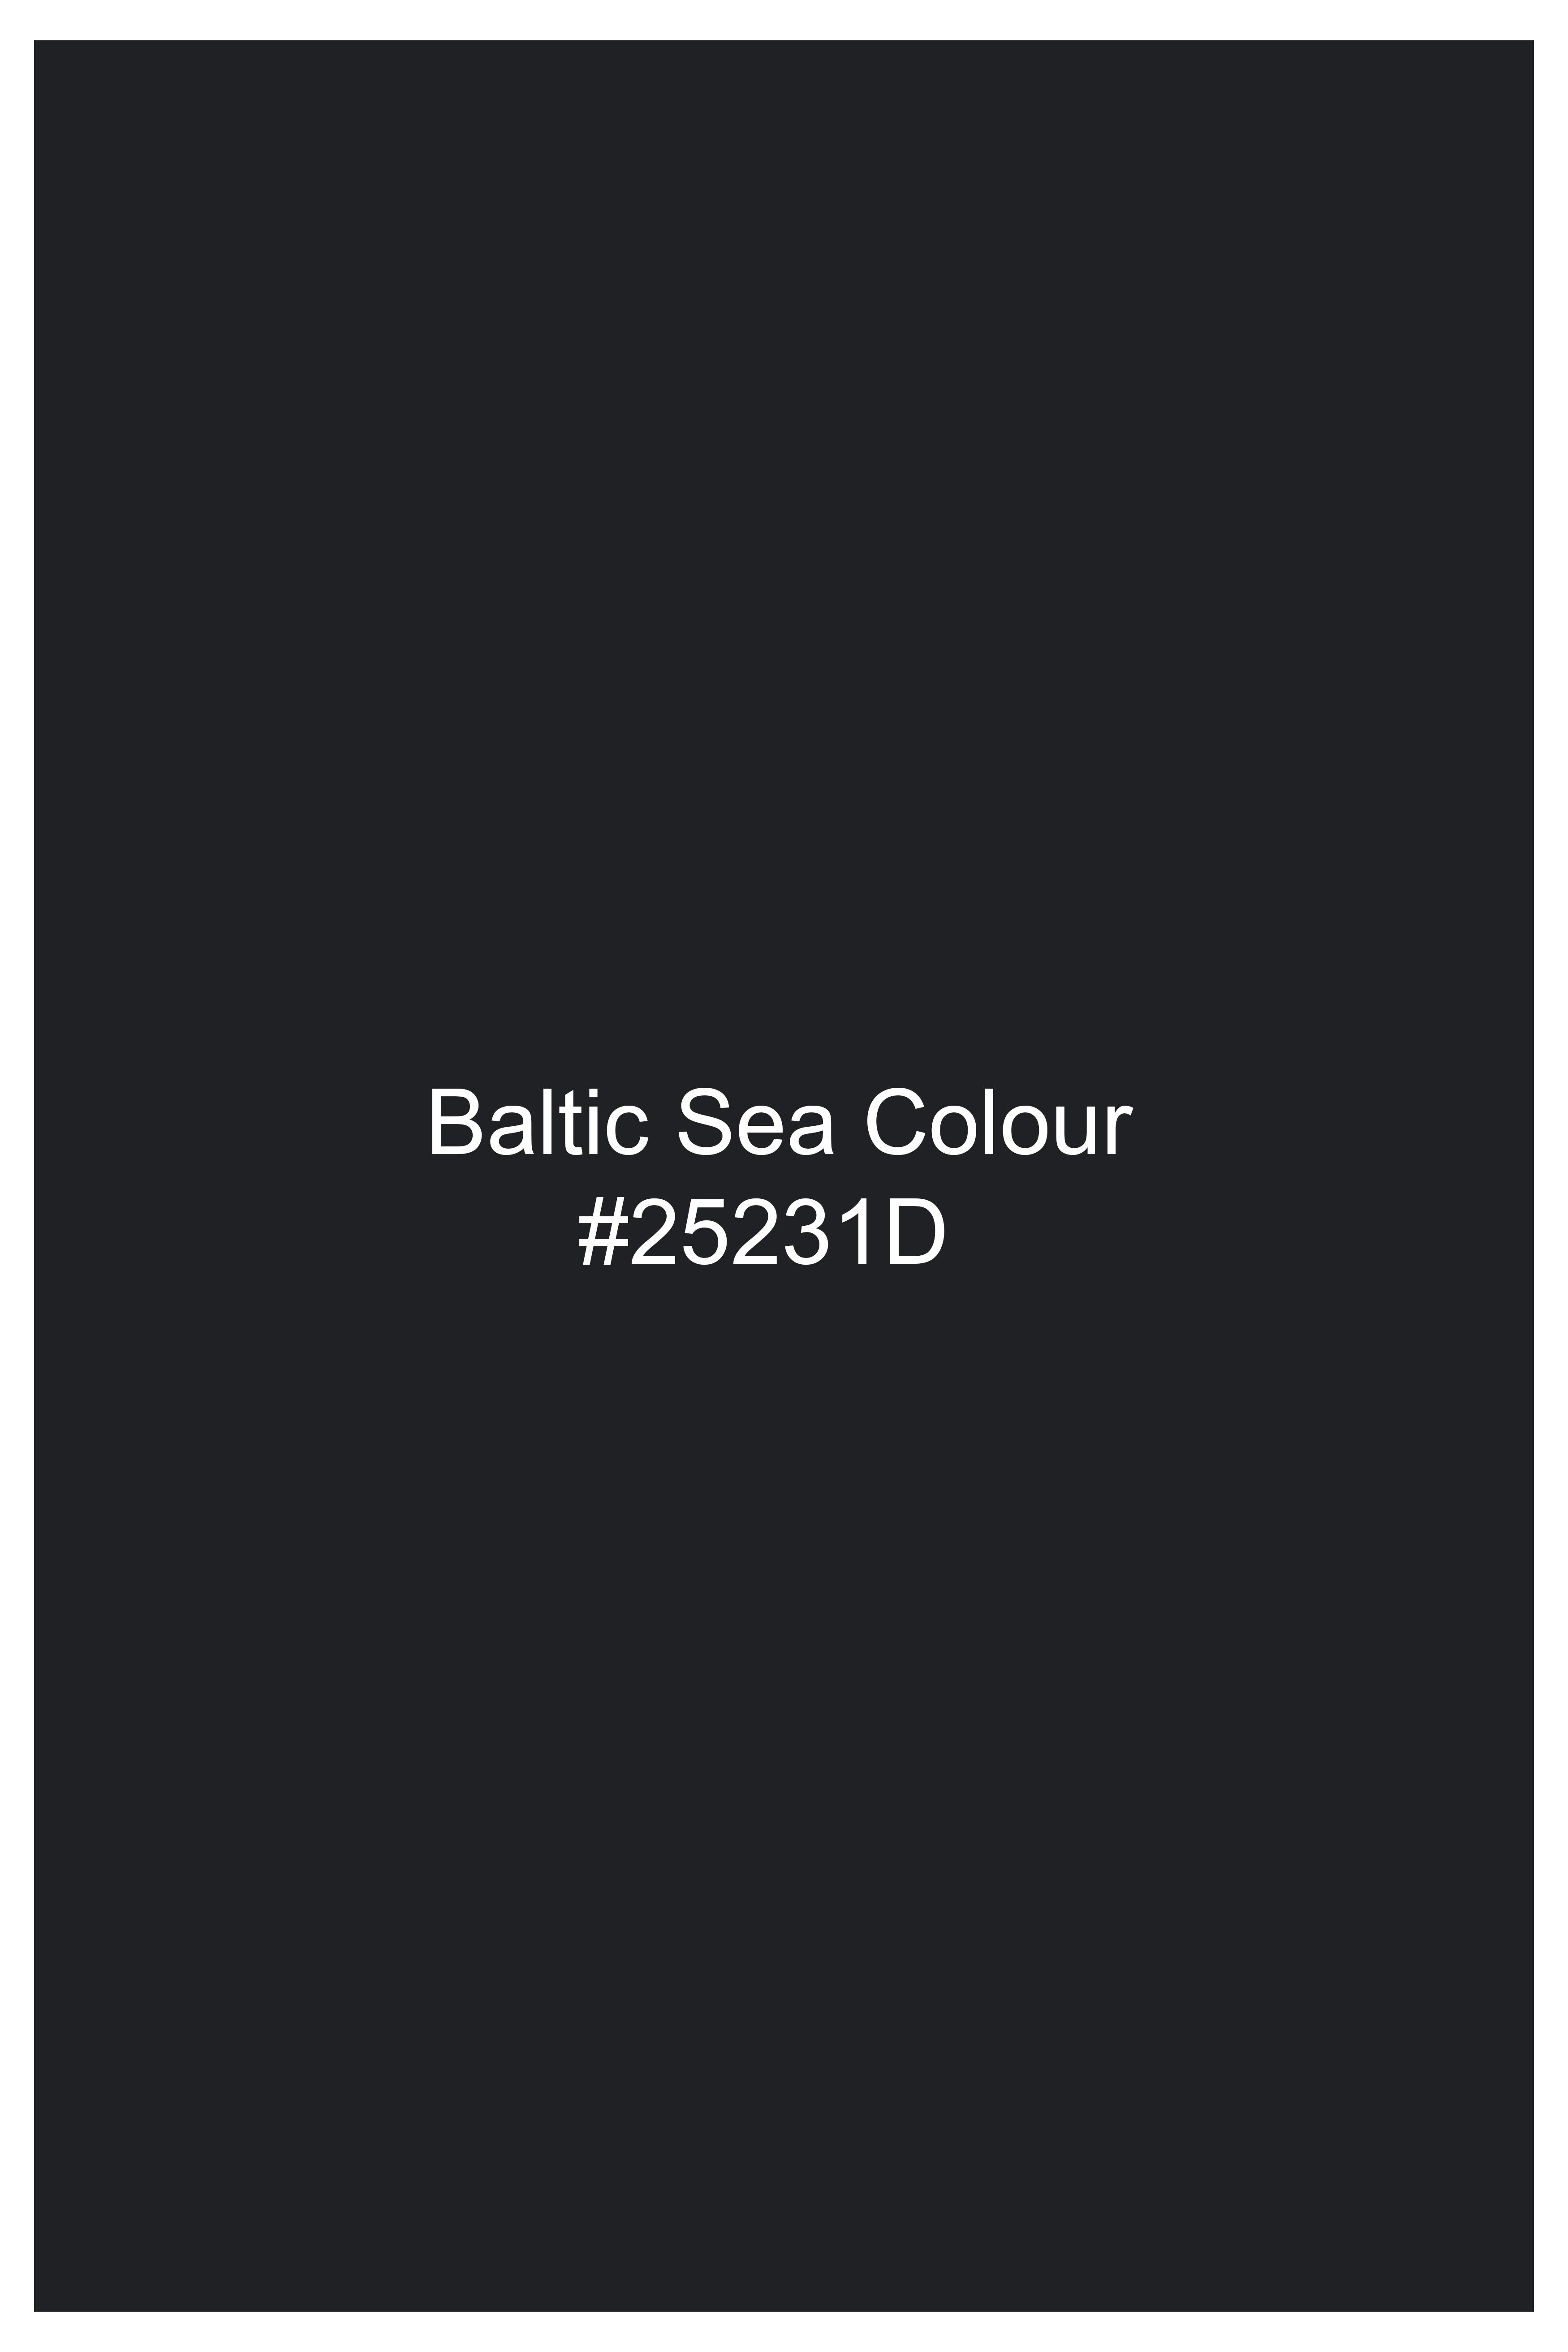 Baltic Sea Black Wool Rich Designer Bandhgala Blazer BL2953-D1-36, BL2953-D1-38, BL2953-D1-40, BL2953-D1-42, BL2953-D1-44, BL2953-D1-46, BL2953-D1-48, BL2953-D1-50, BL2953-D1-52, BL2953-D1-54, BL2953-D1-56, BL2953-D1-58, BL2953-D1-60